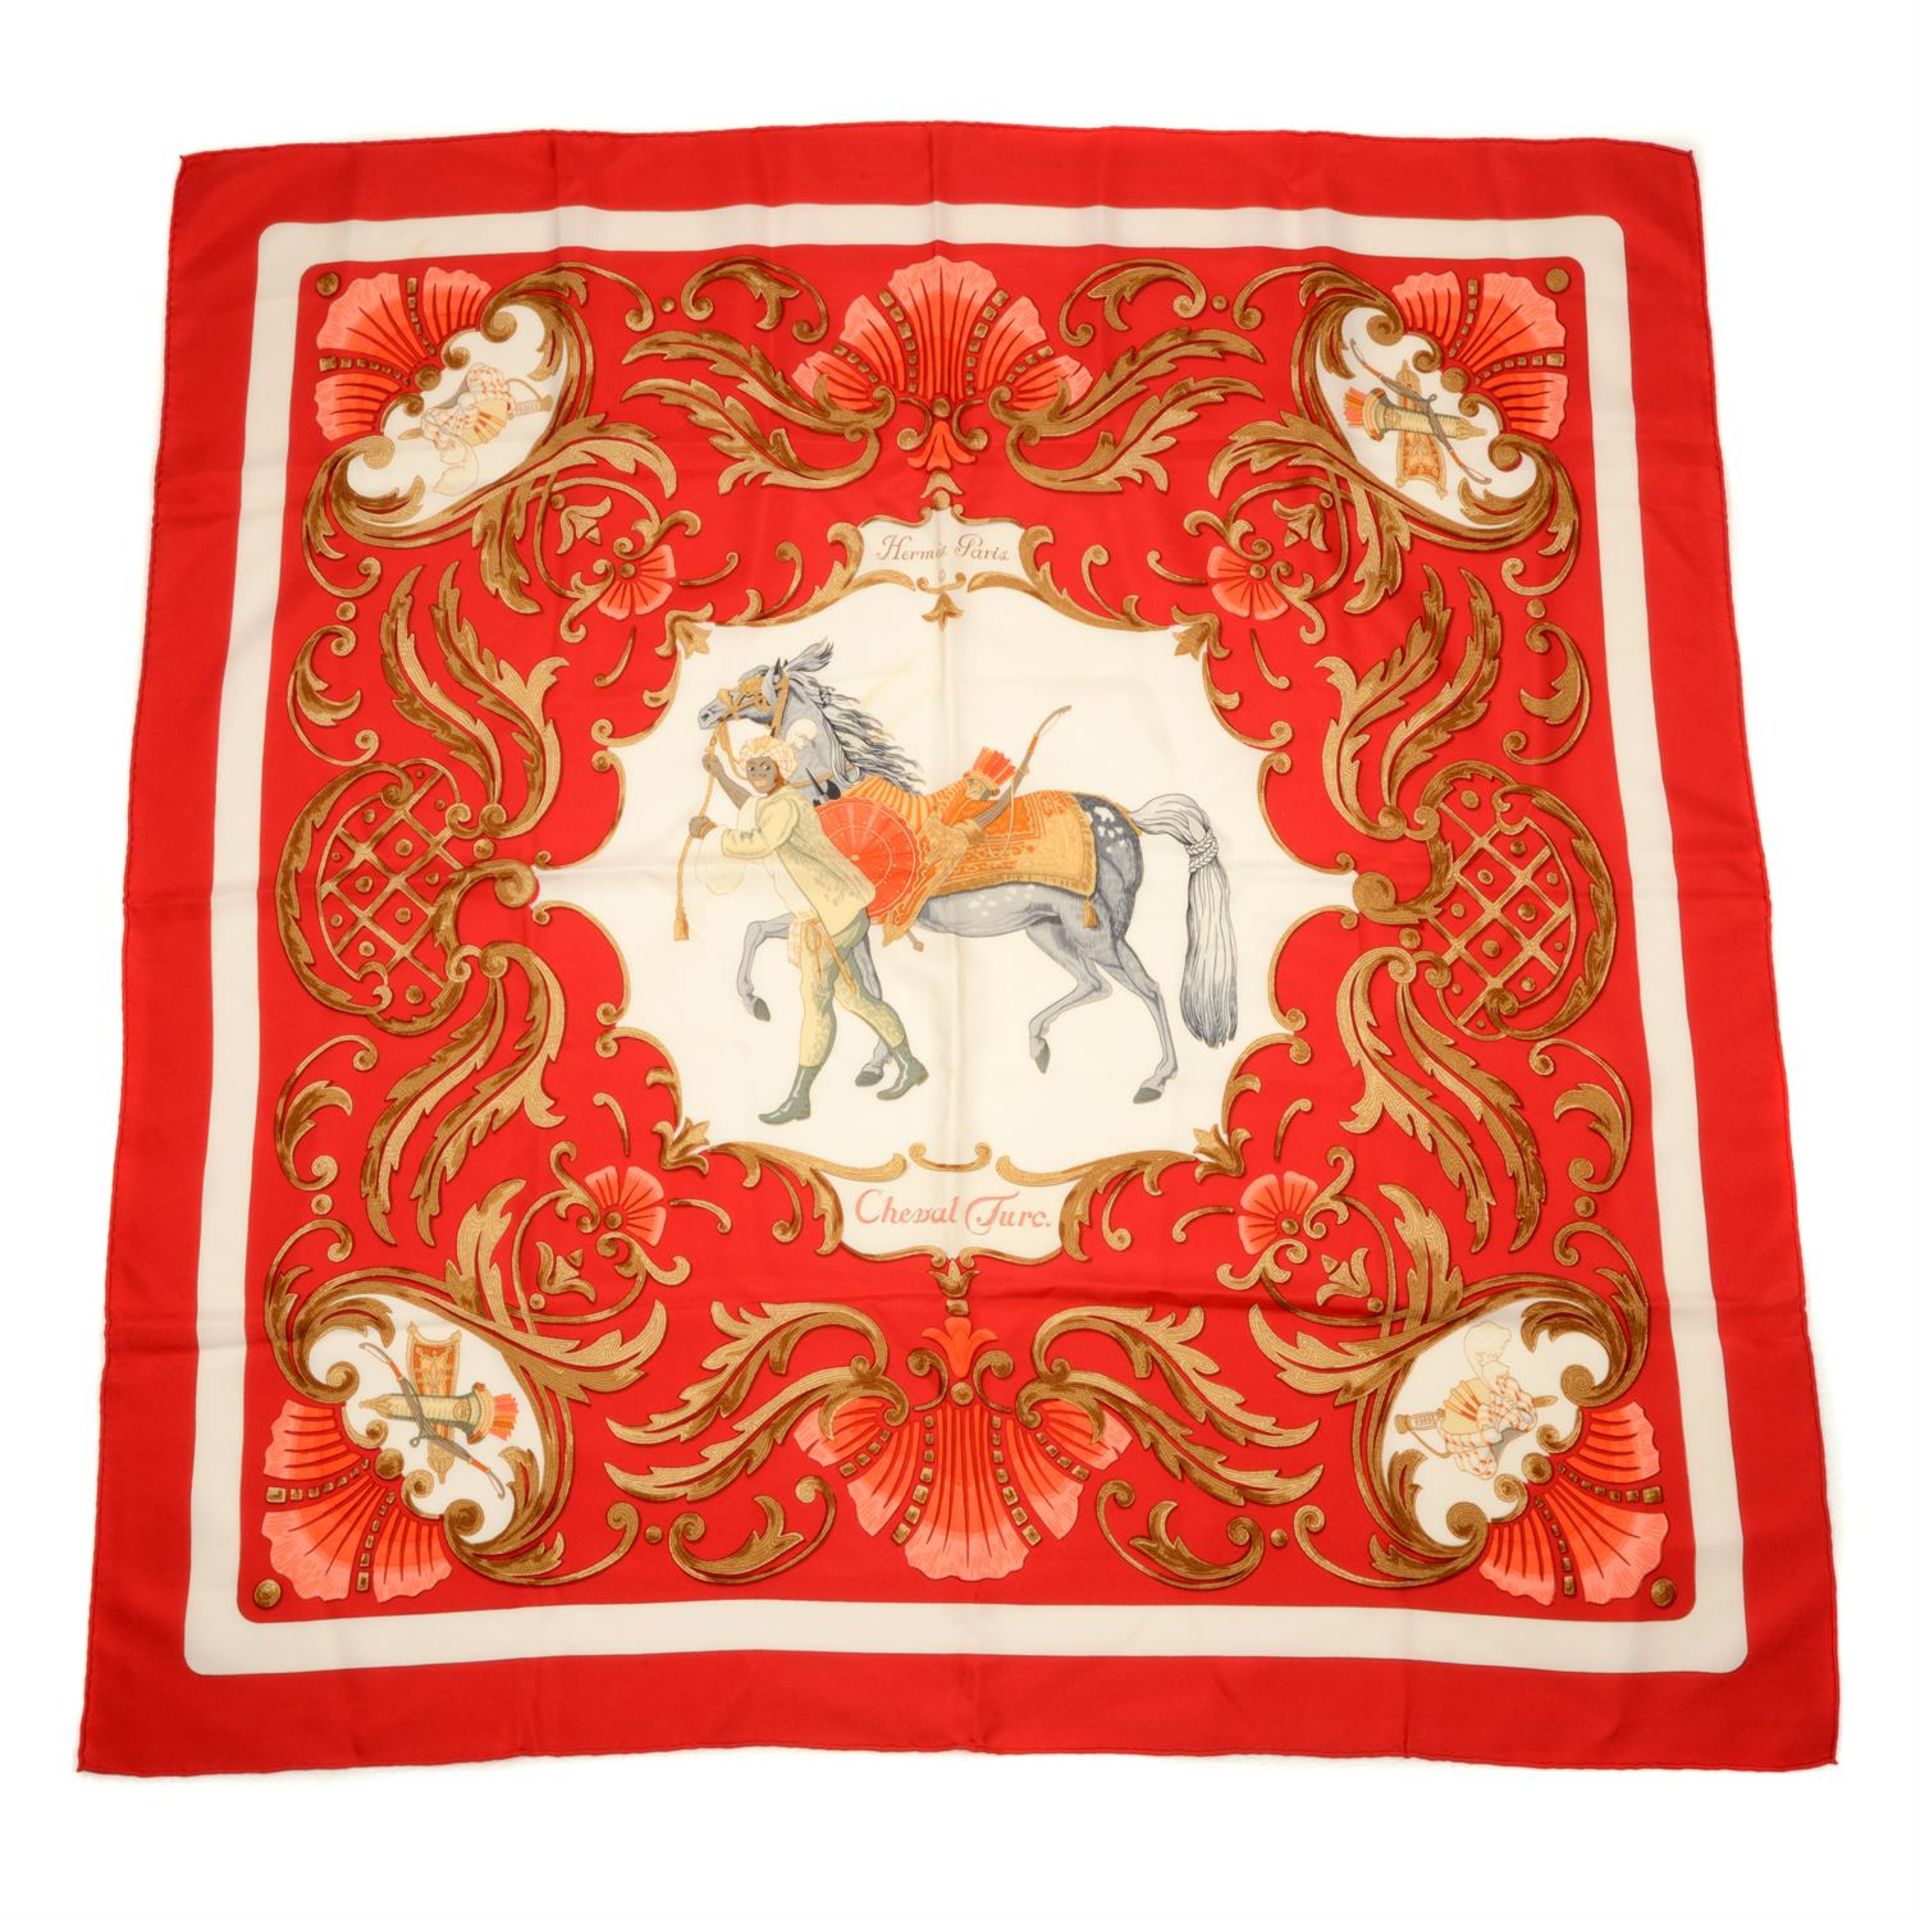 HERMÈS - a red 'Cheval Turc' print silk scarf.